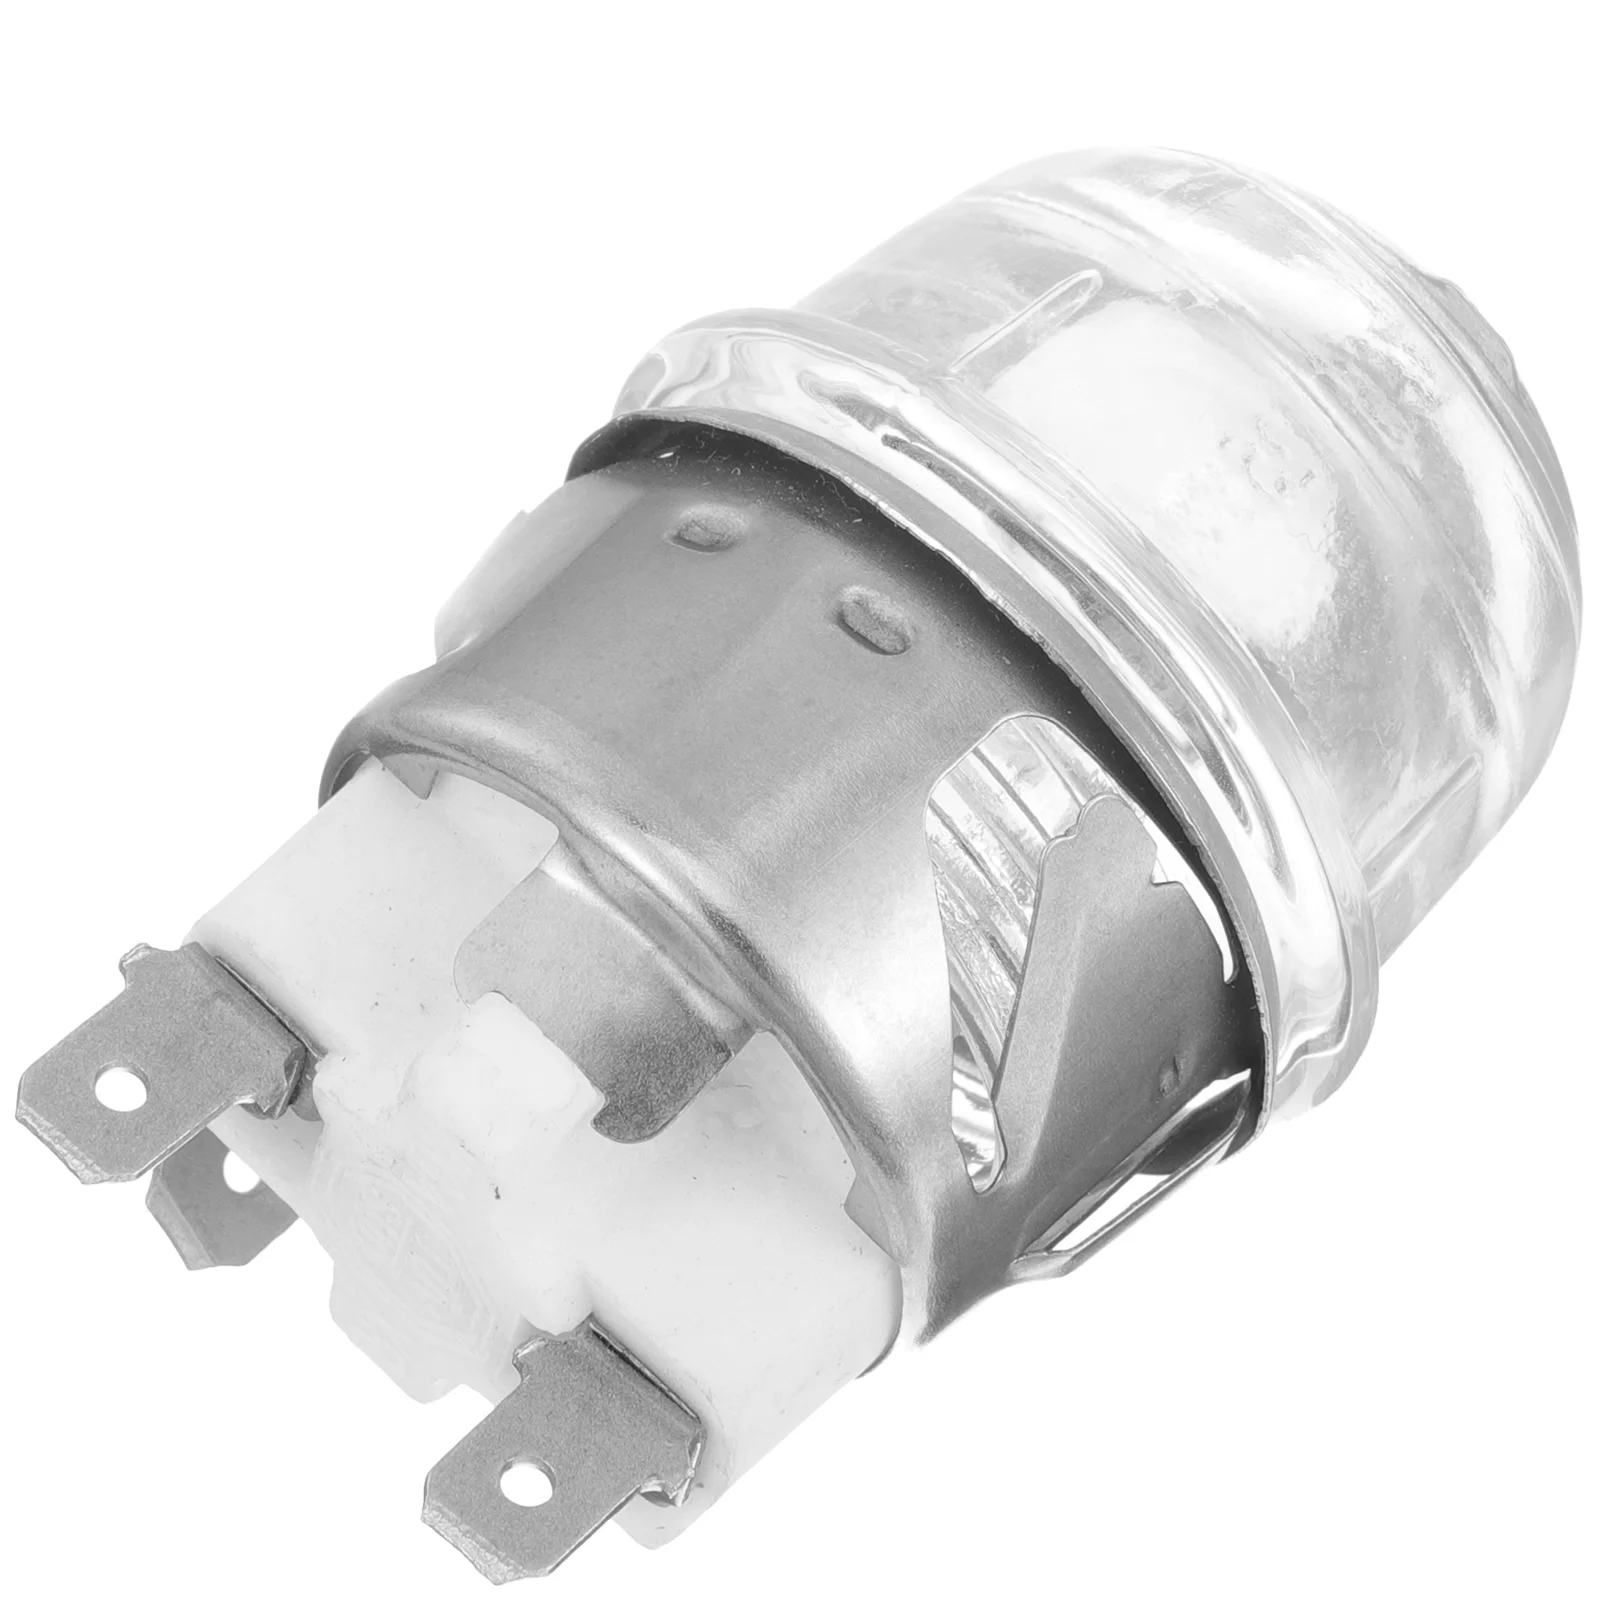 

Oven Lamp Adapter Light G9 Holder Bulb Outlet Socket High Temperature Resistance